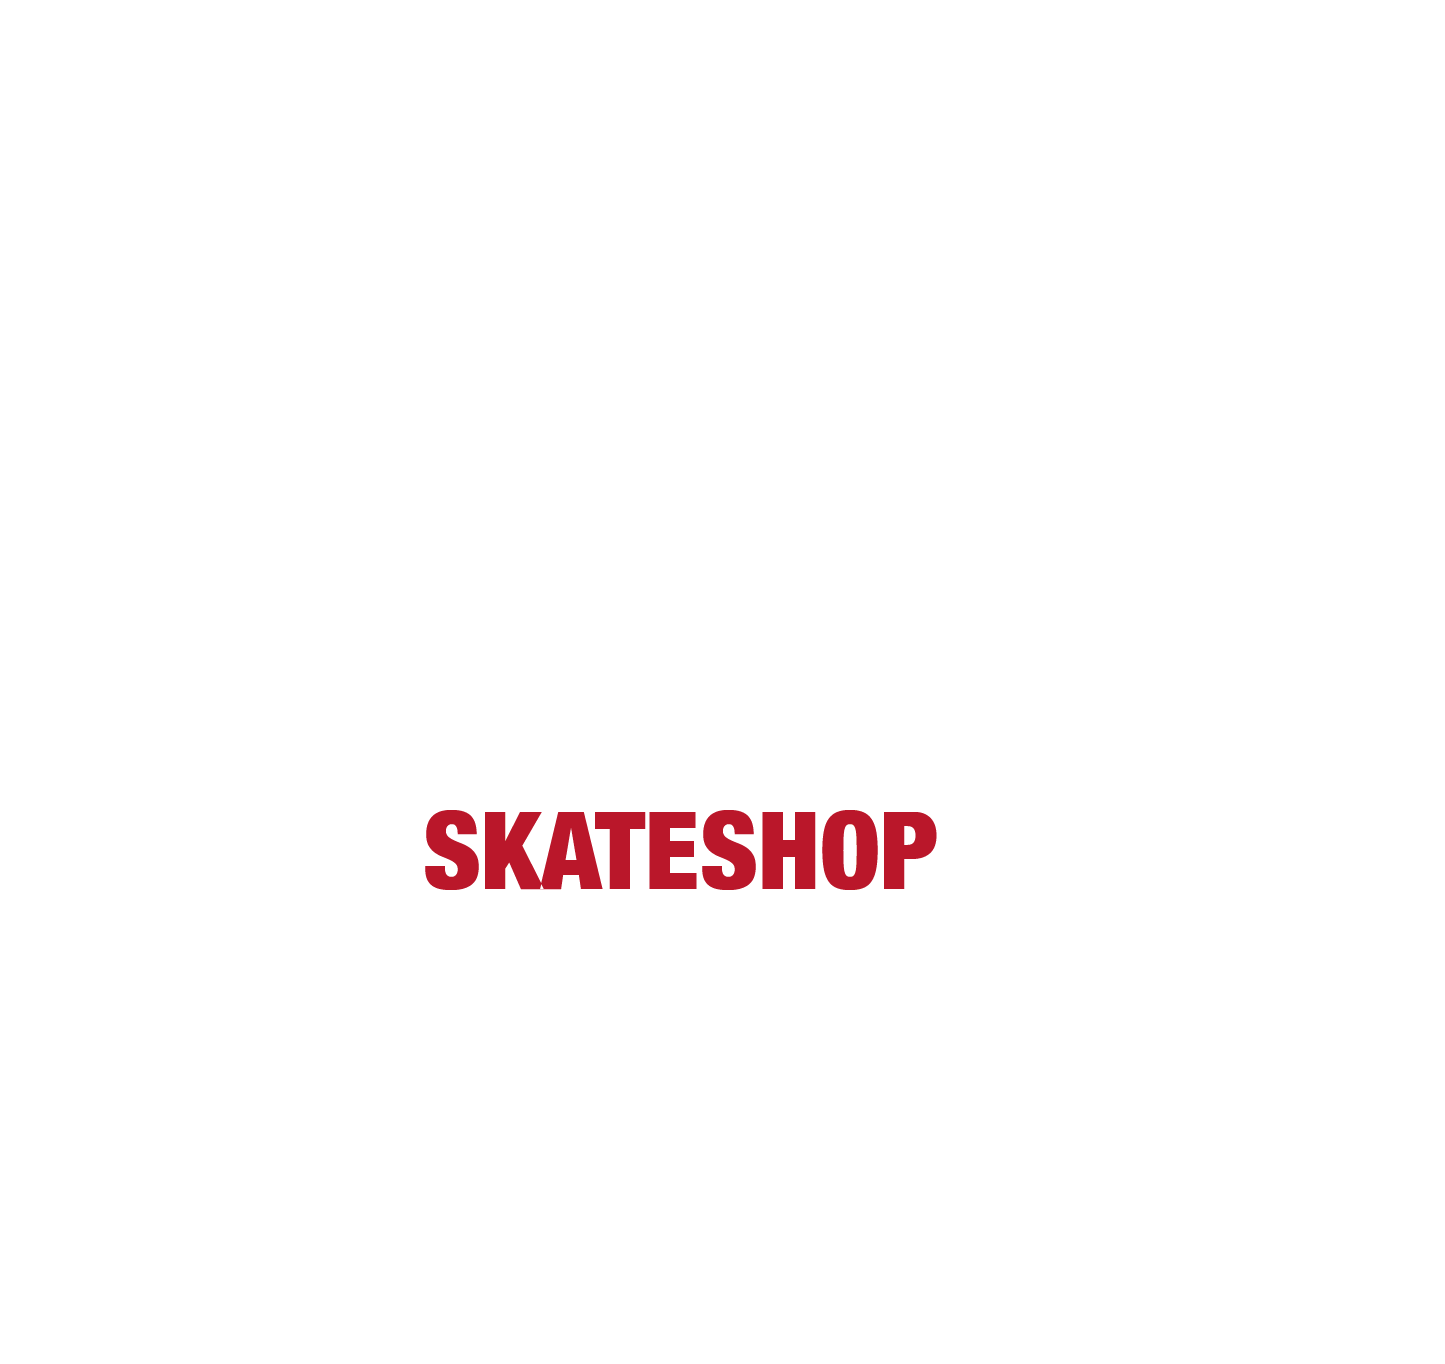 Style Skateshop Wild Skateshop